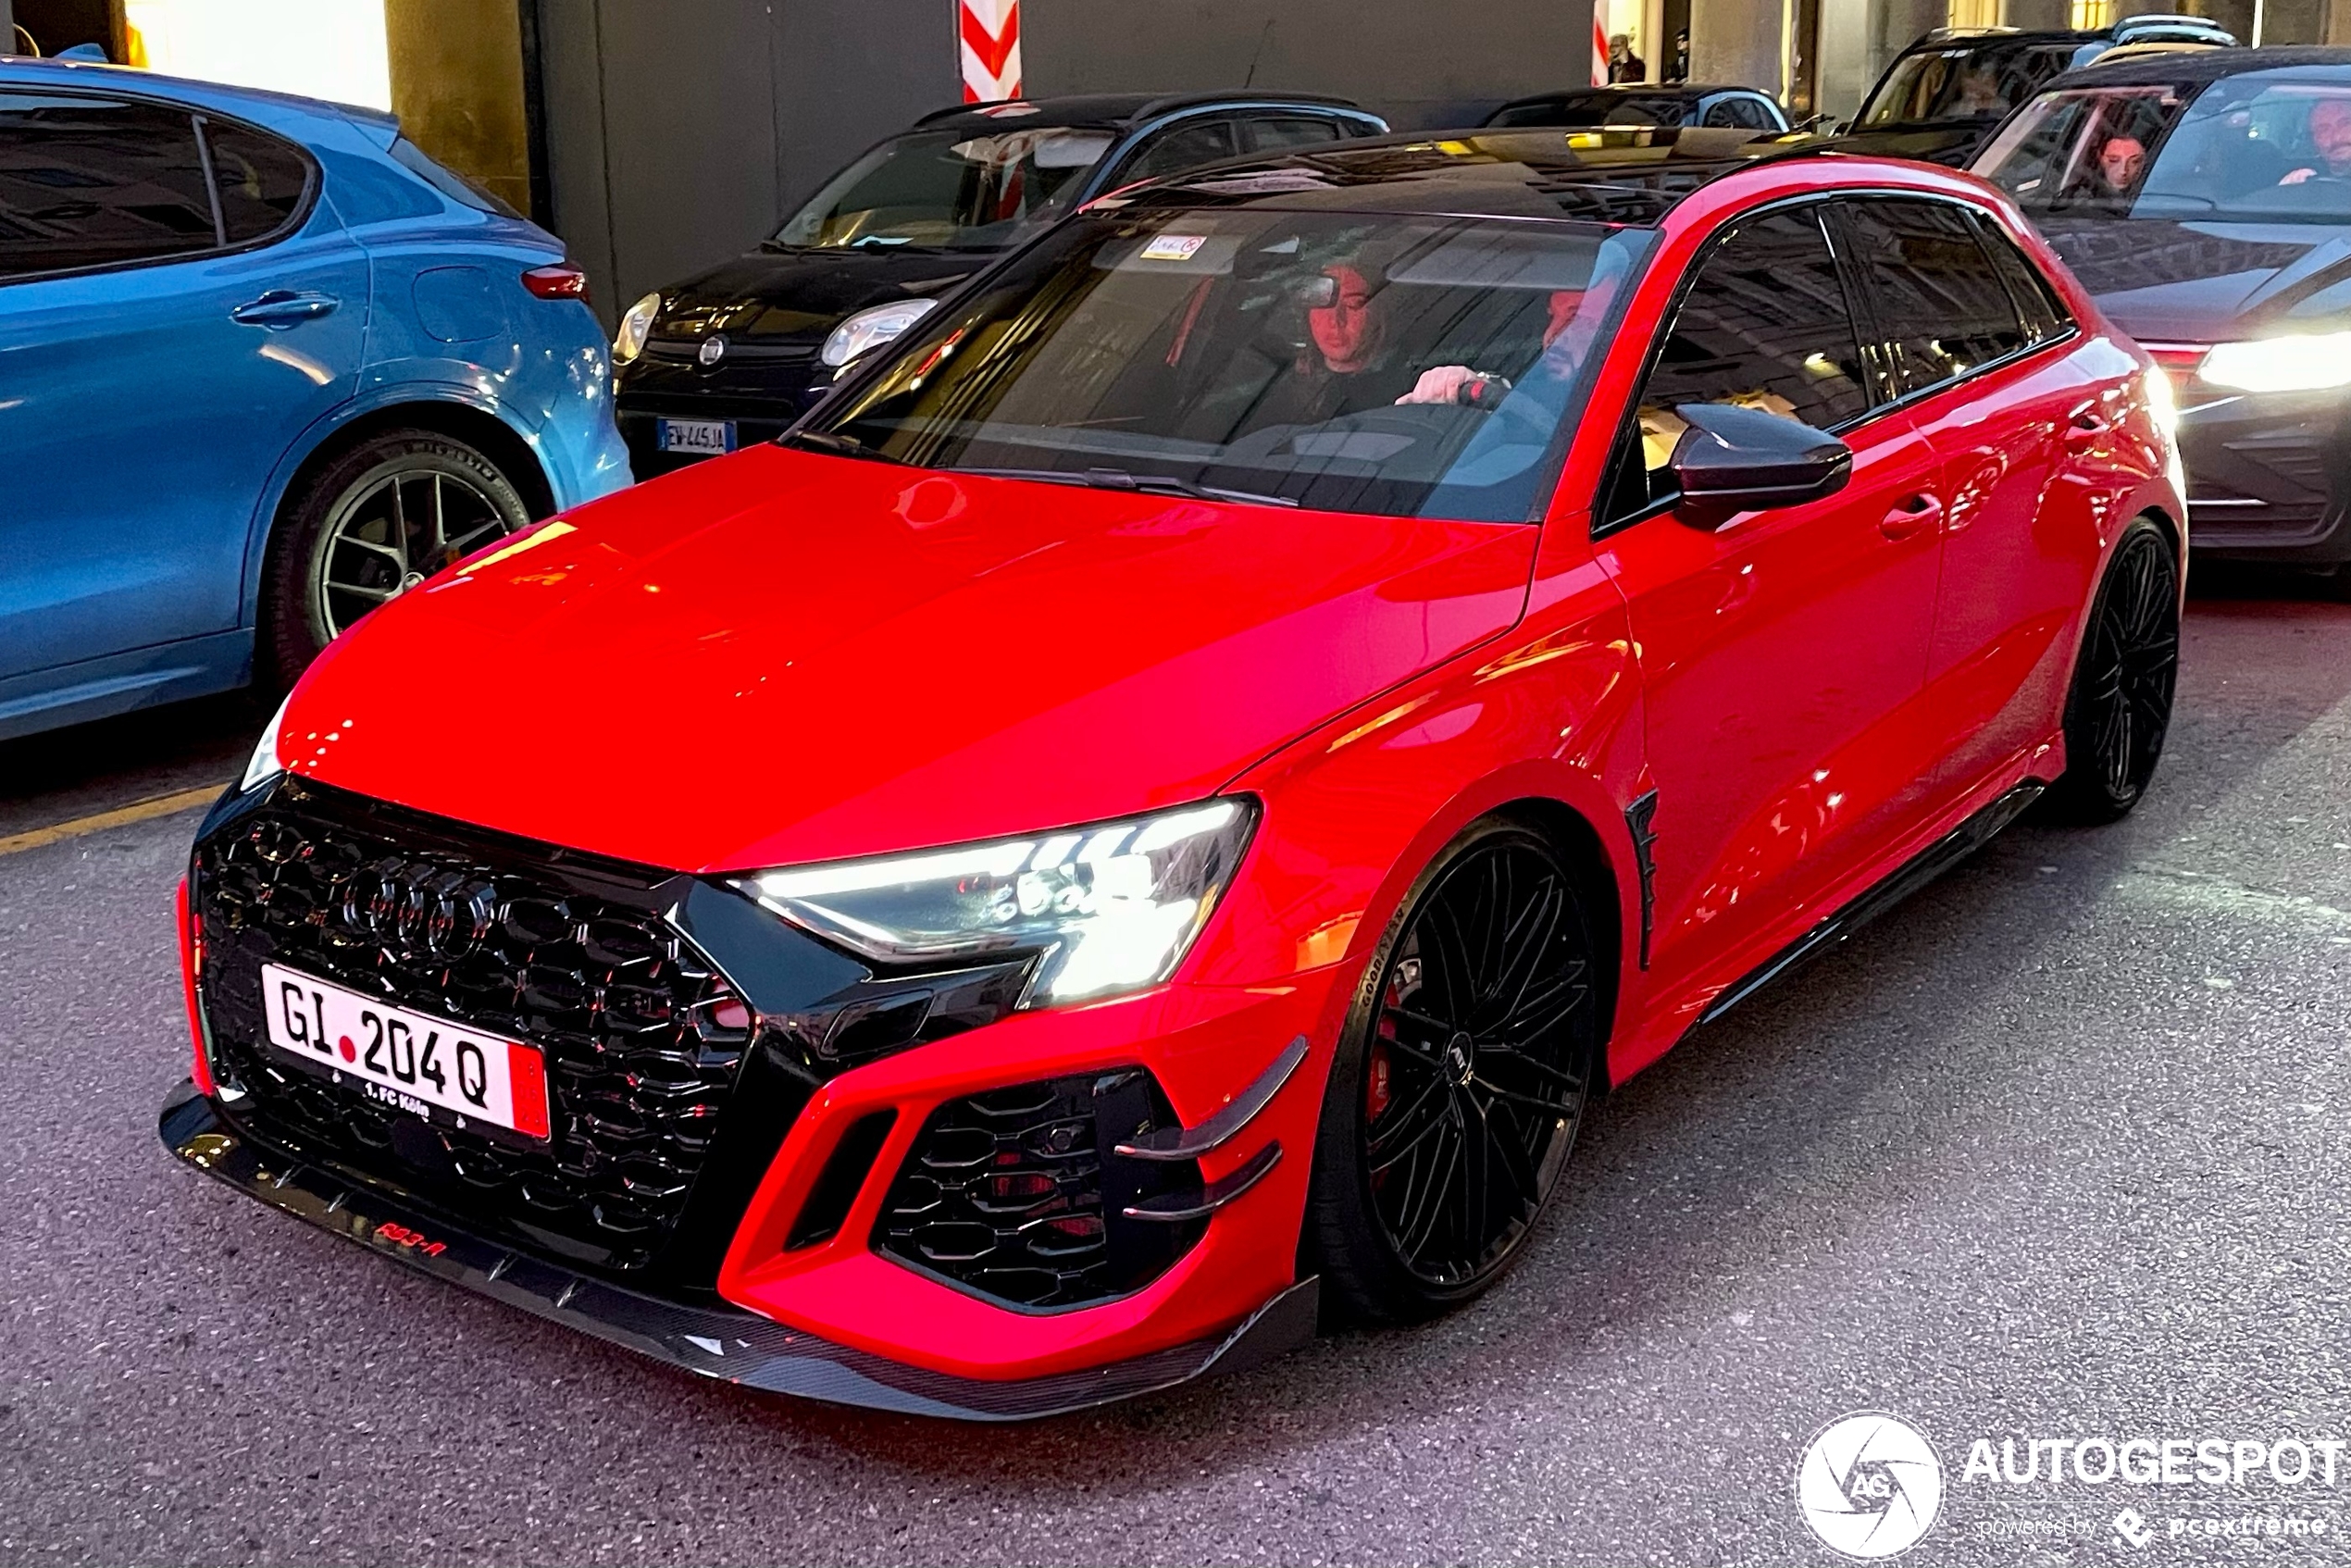 Minder agressief maar daardoor niet minder leuk: Audi ABT RS3-R